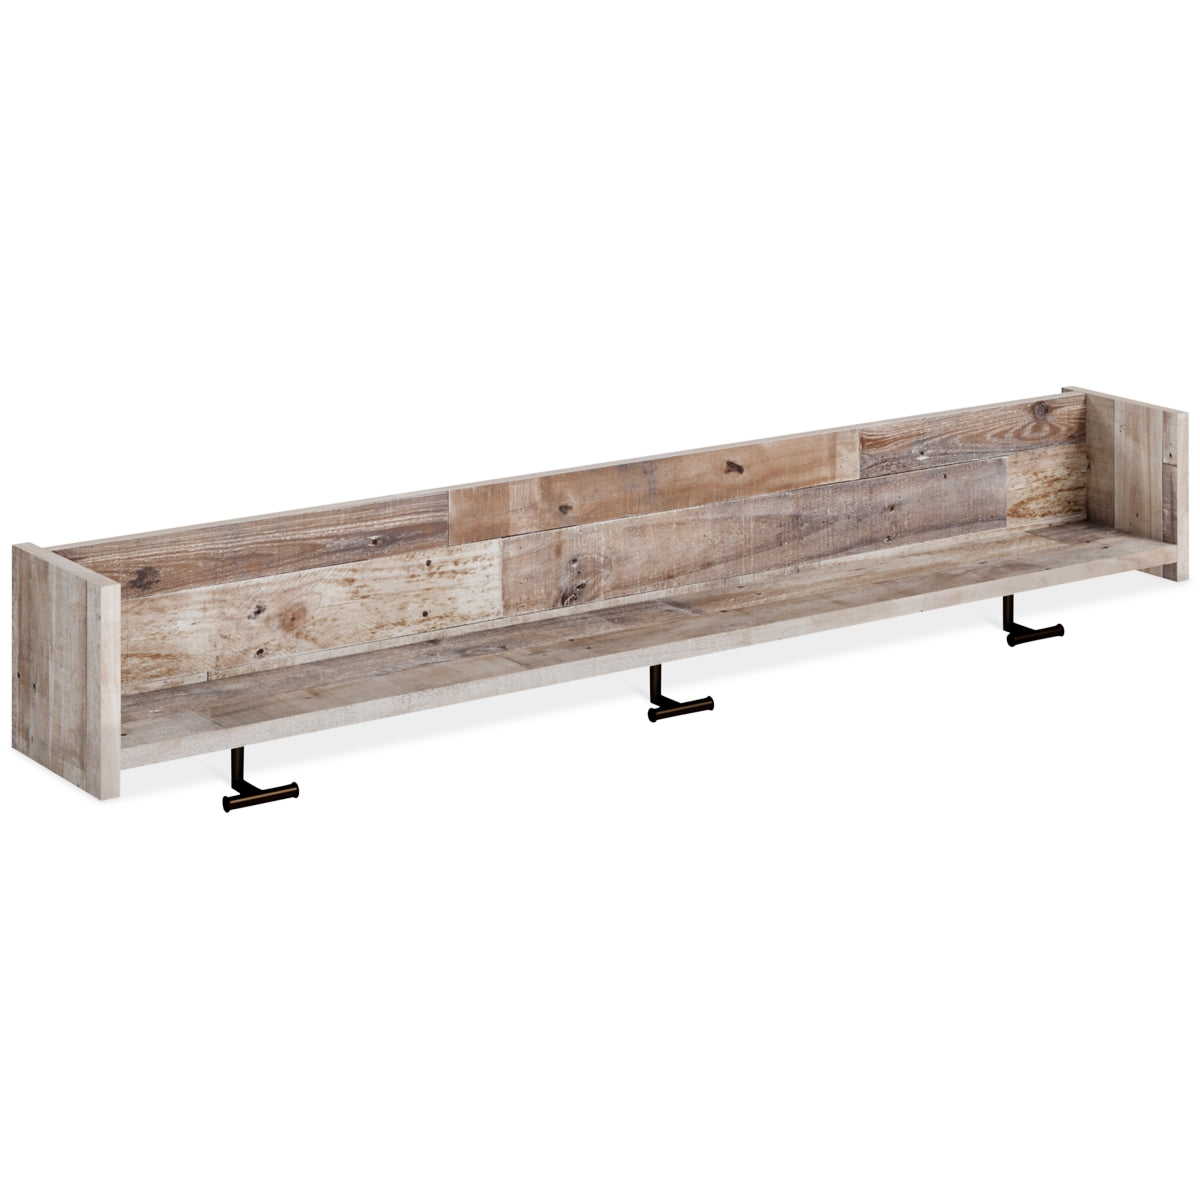 Reclaimed Wood Coat Rack Shelf